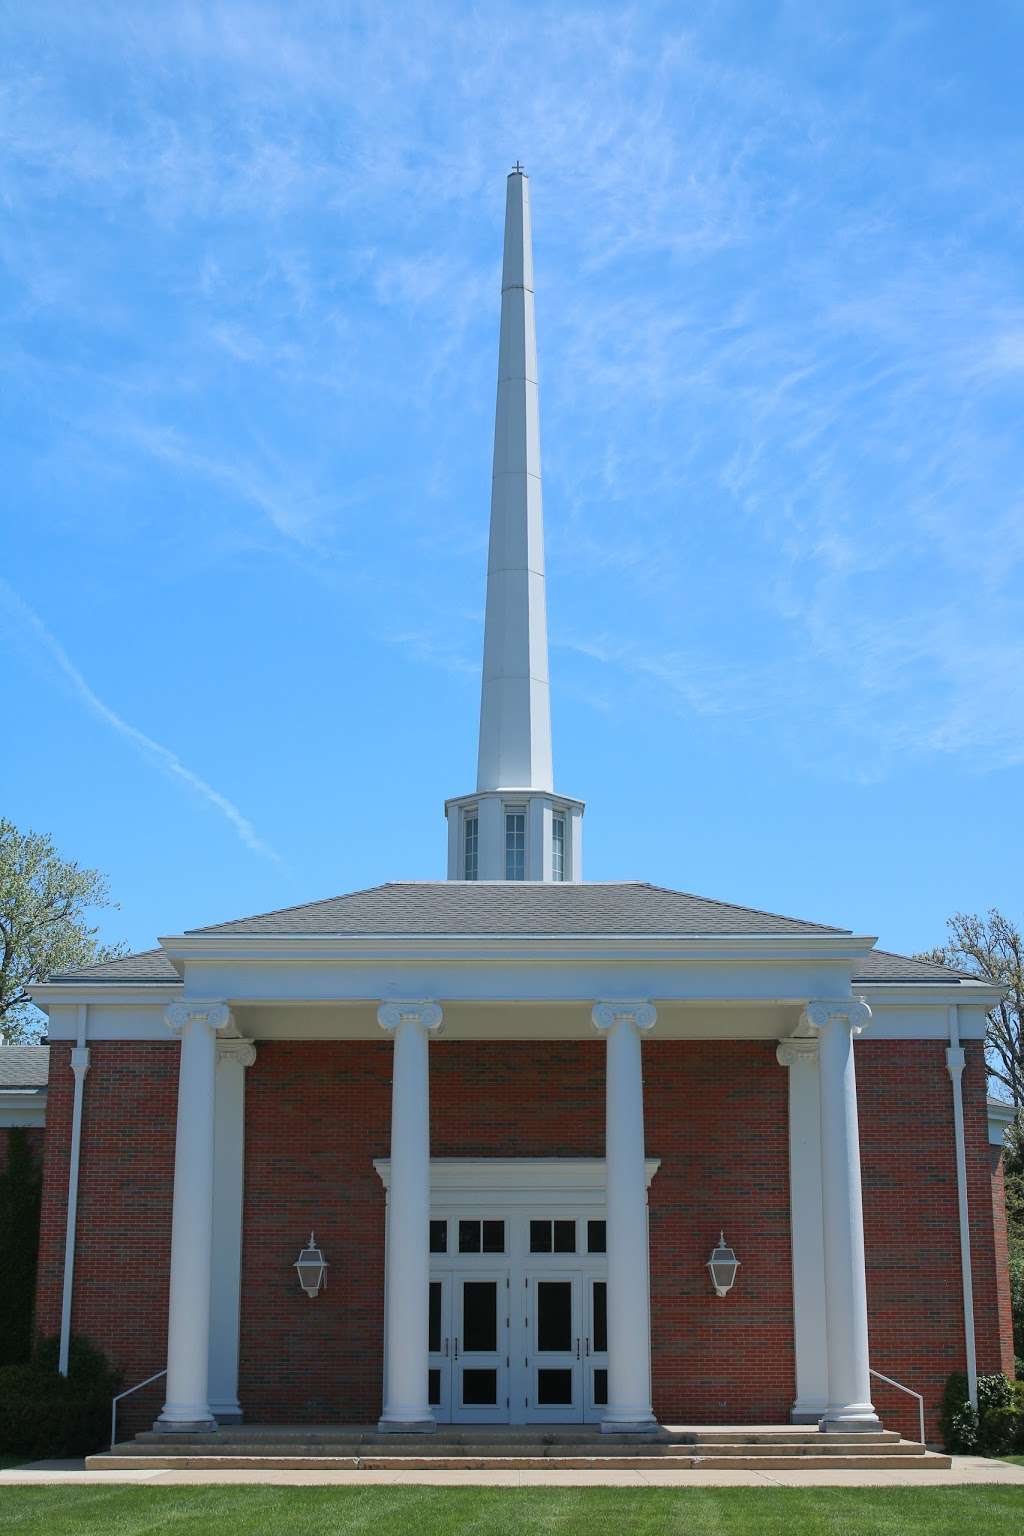 Winnetka Covenant Church | 1200 Hibbard Rd, Wilmette, IL 60091, USA | Phone: (847) 446-4300